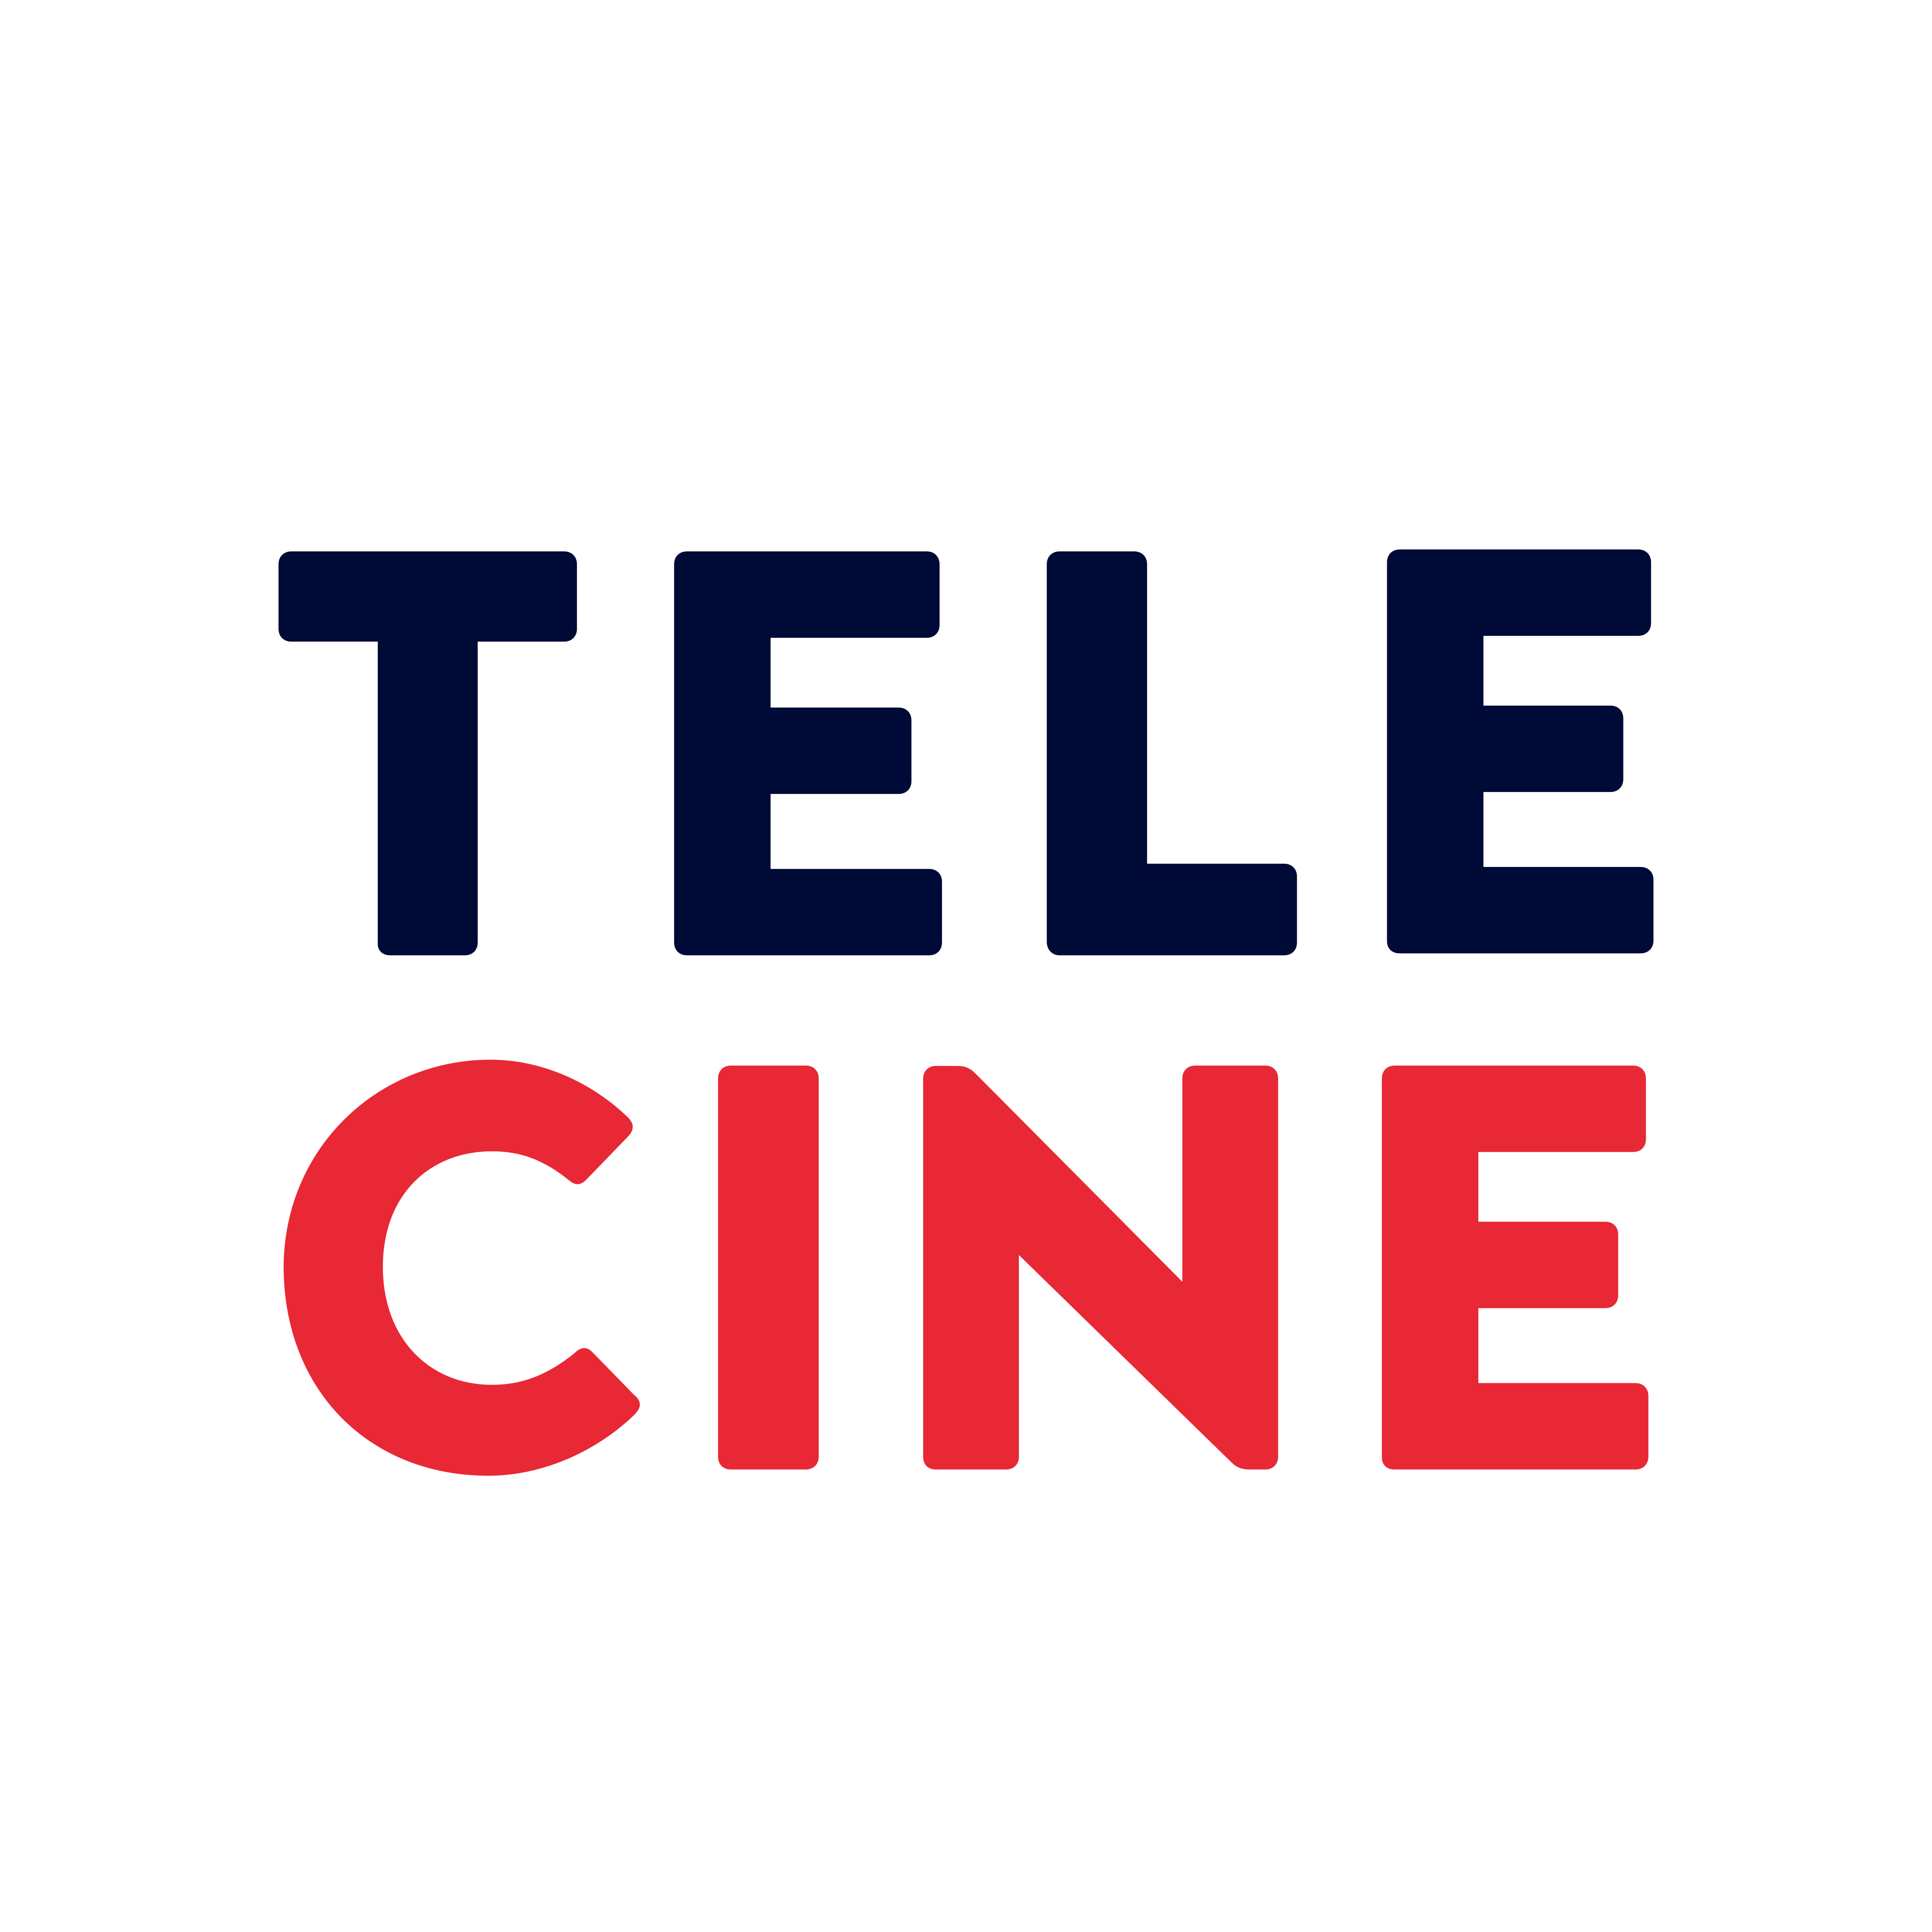 Telecine logo PNG.